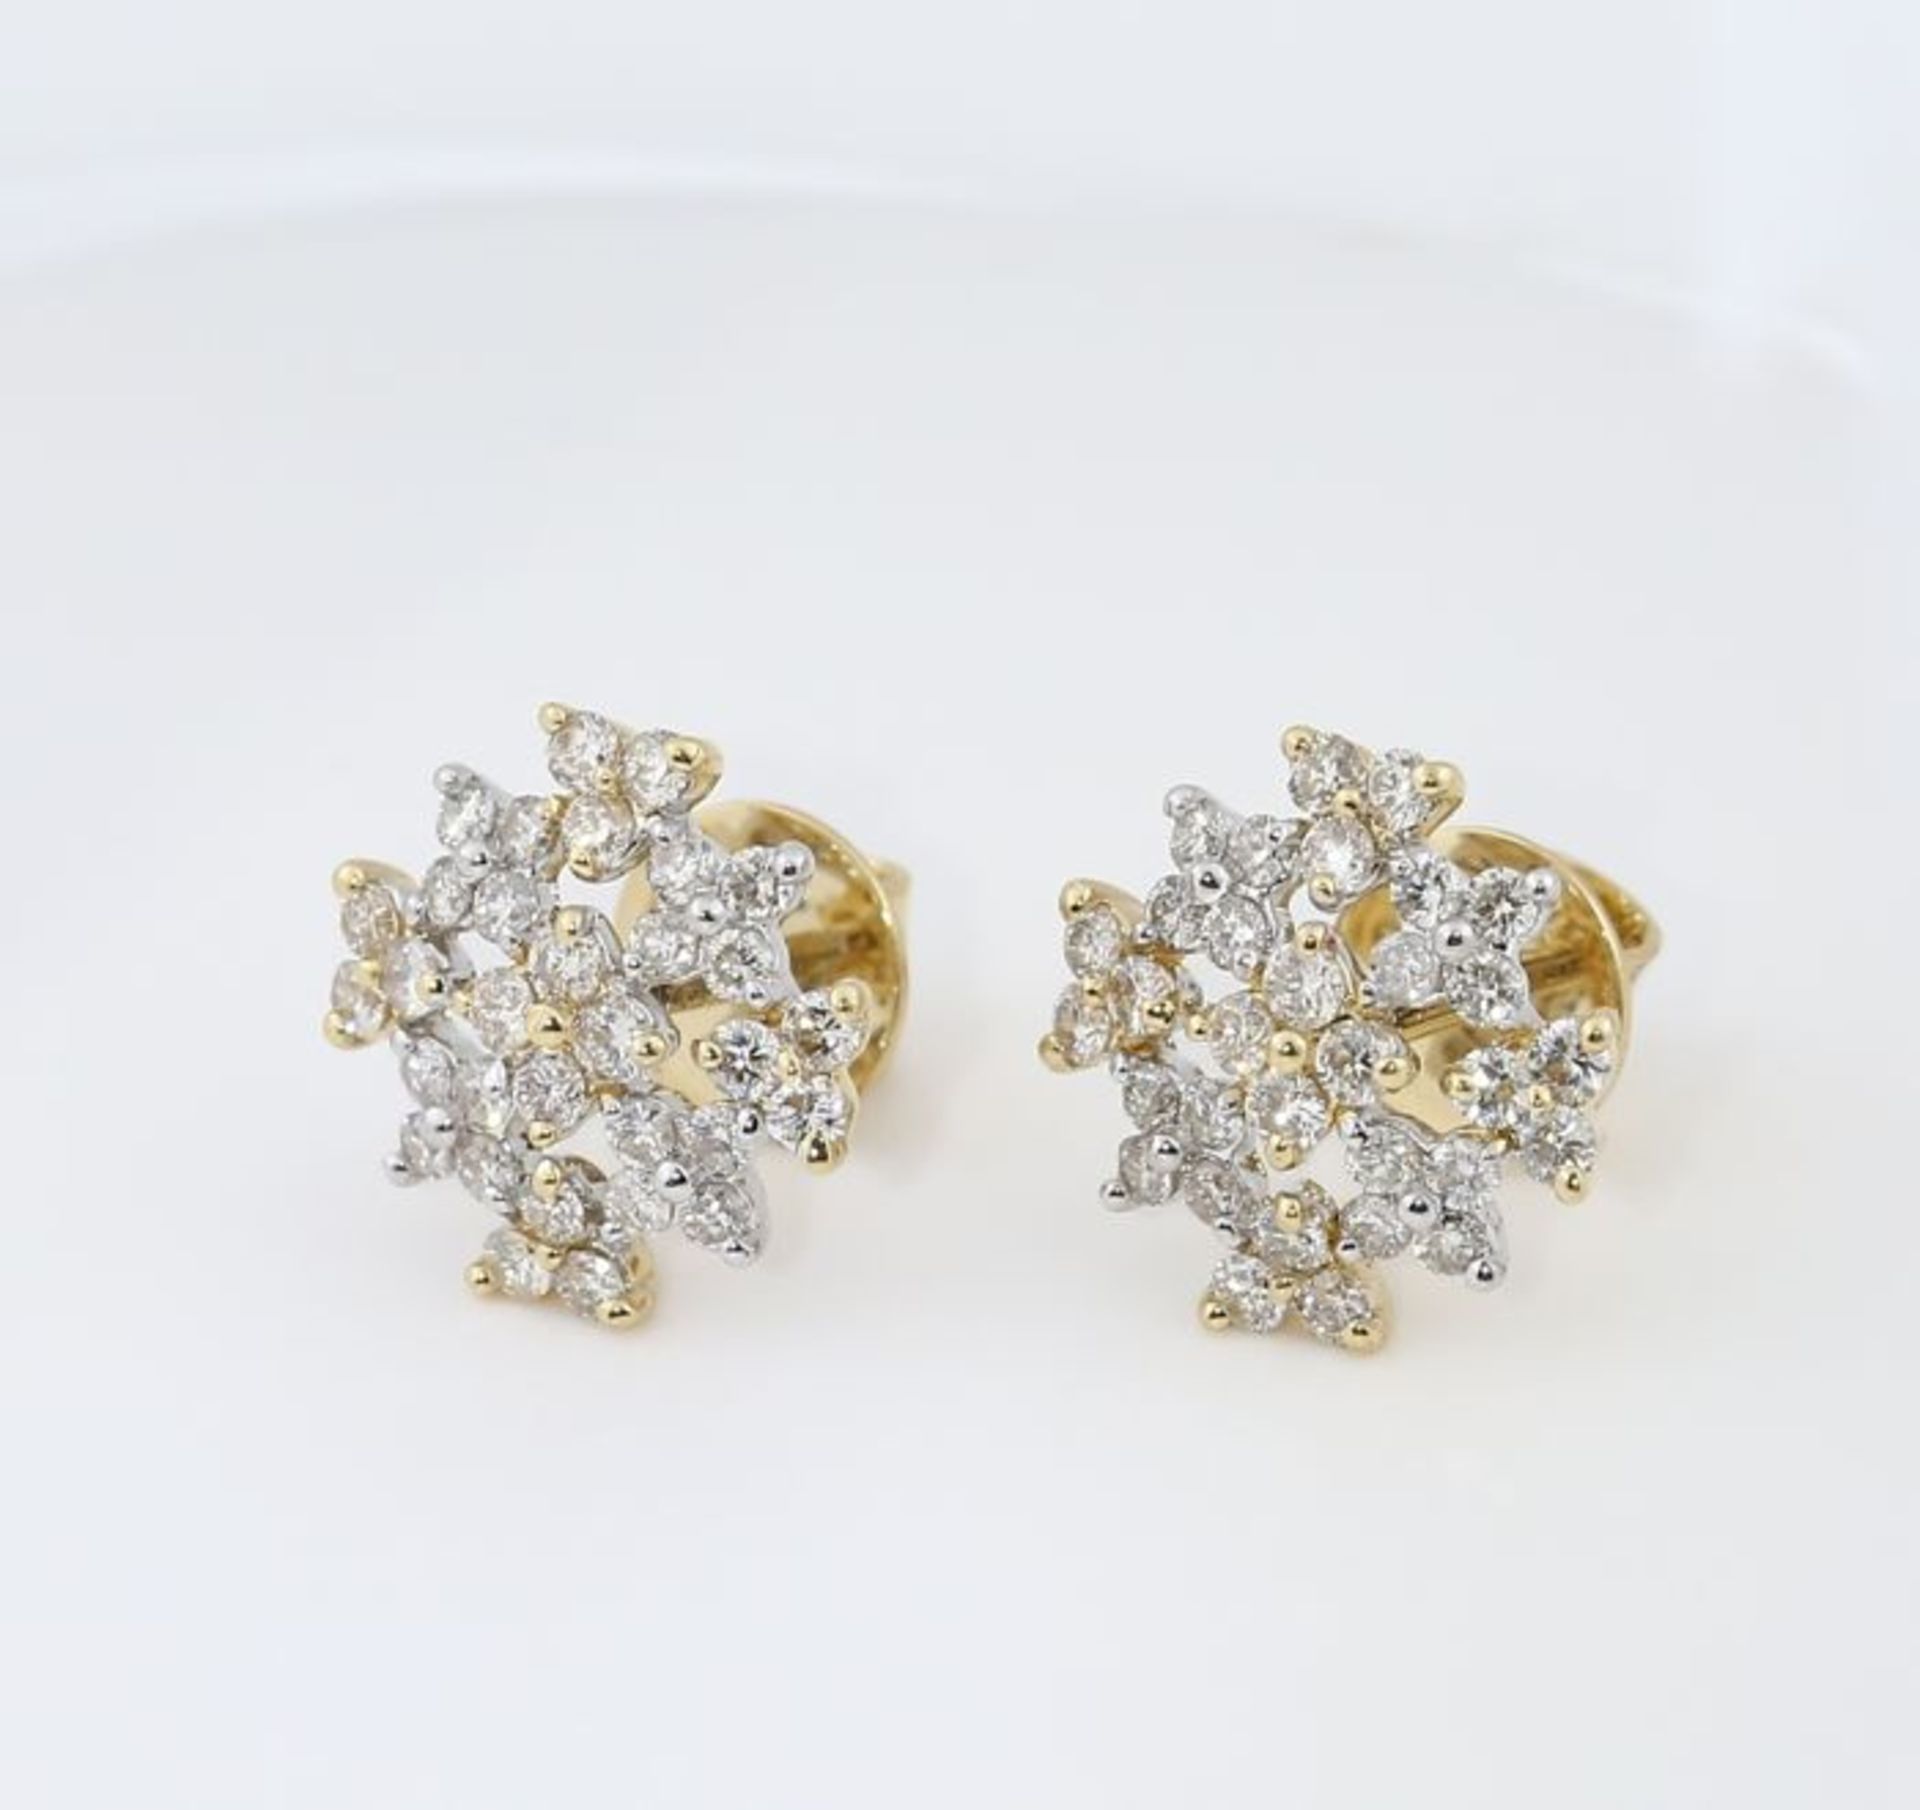 IGI Certified 18 K / 750 Yellow Gold Diamond Earrings - Image 6 of 7